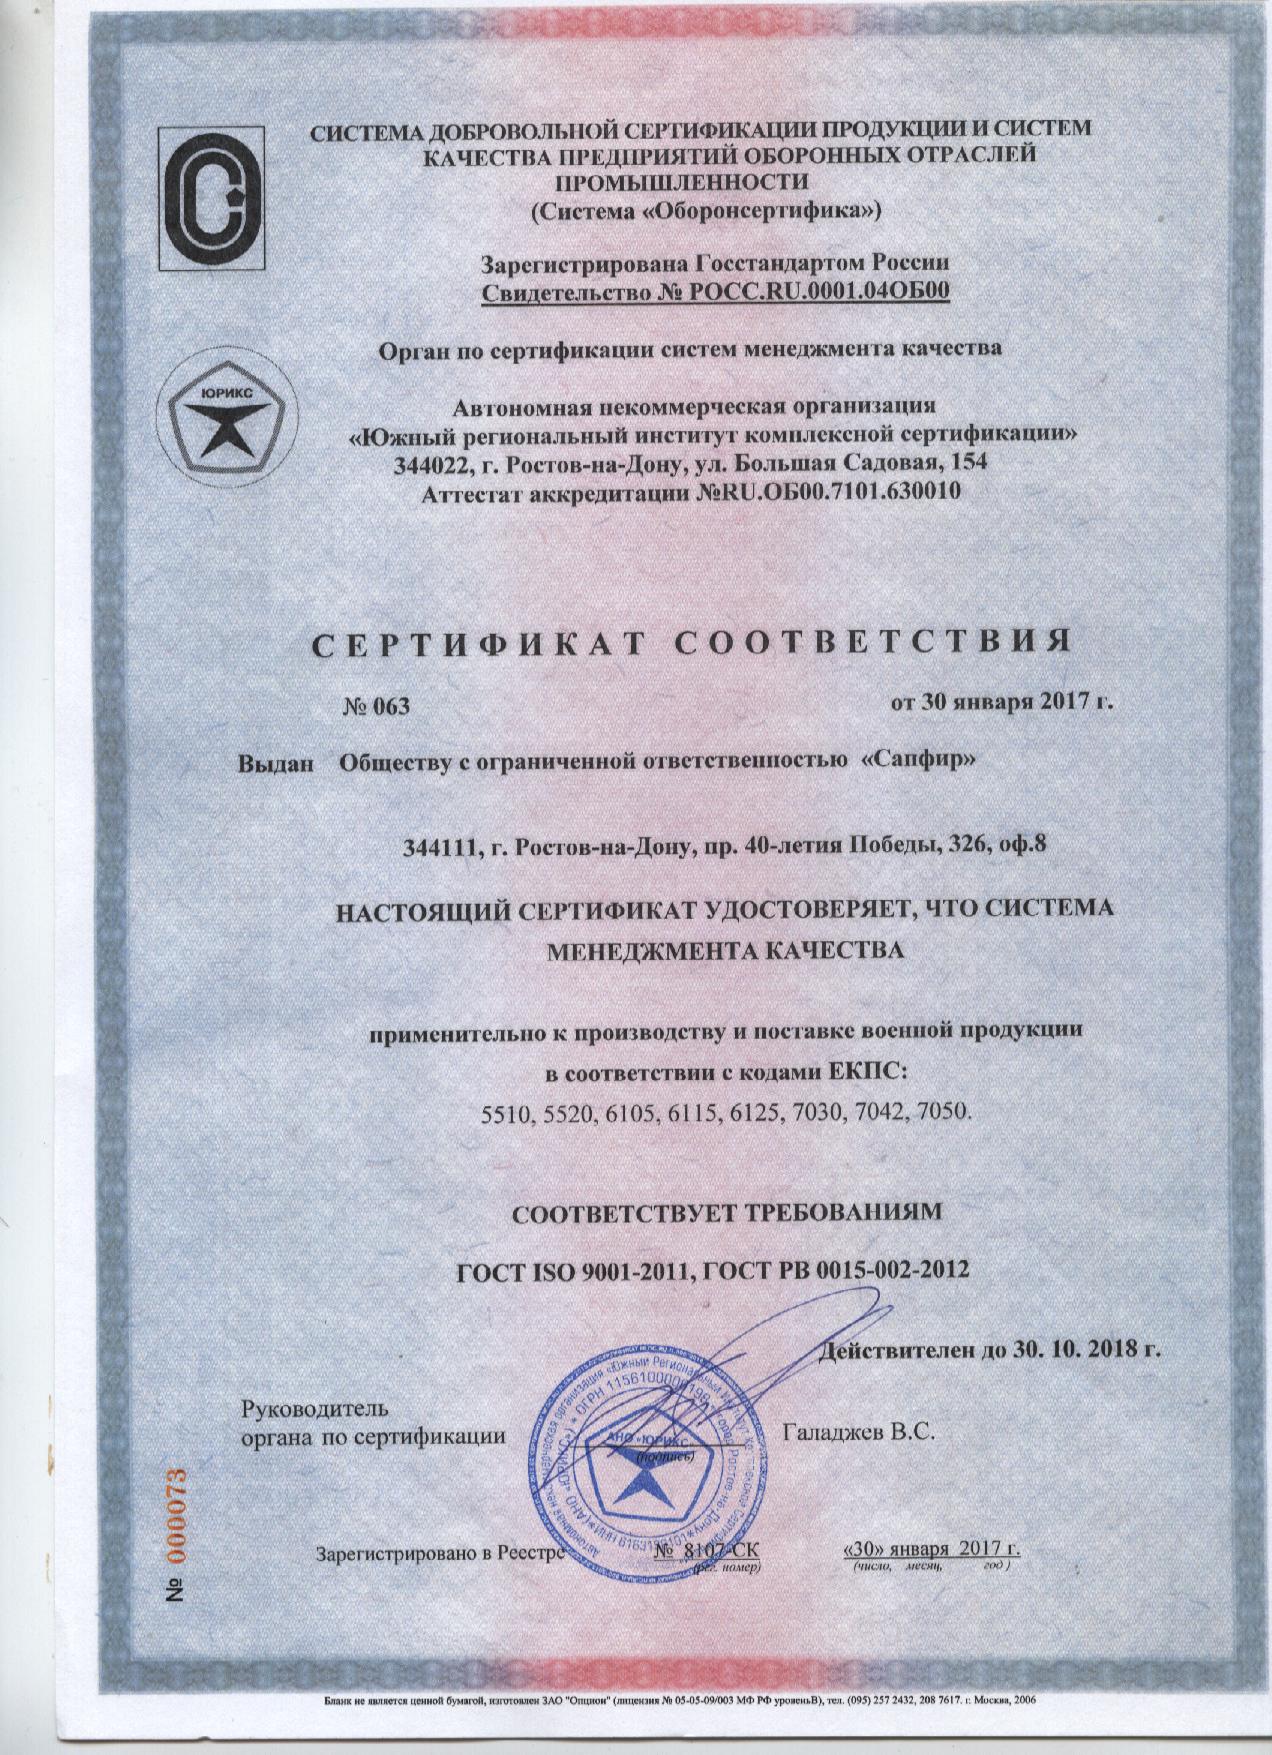 Смк 2020. Сертификат ГОСТ РВ 0015-002-2020. Сертификат соответствия ГОСТ РВ 0015-002-2020. СМК сертификат соответствия РВ 0015. Сертификация СМК ГОСТ РВ 0015-002-2020.